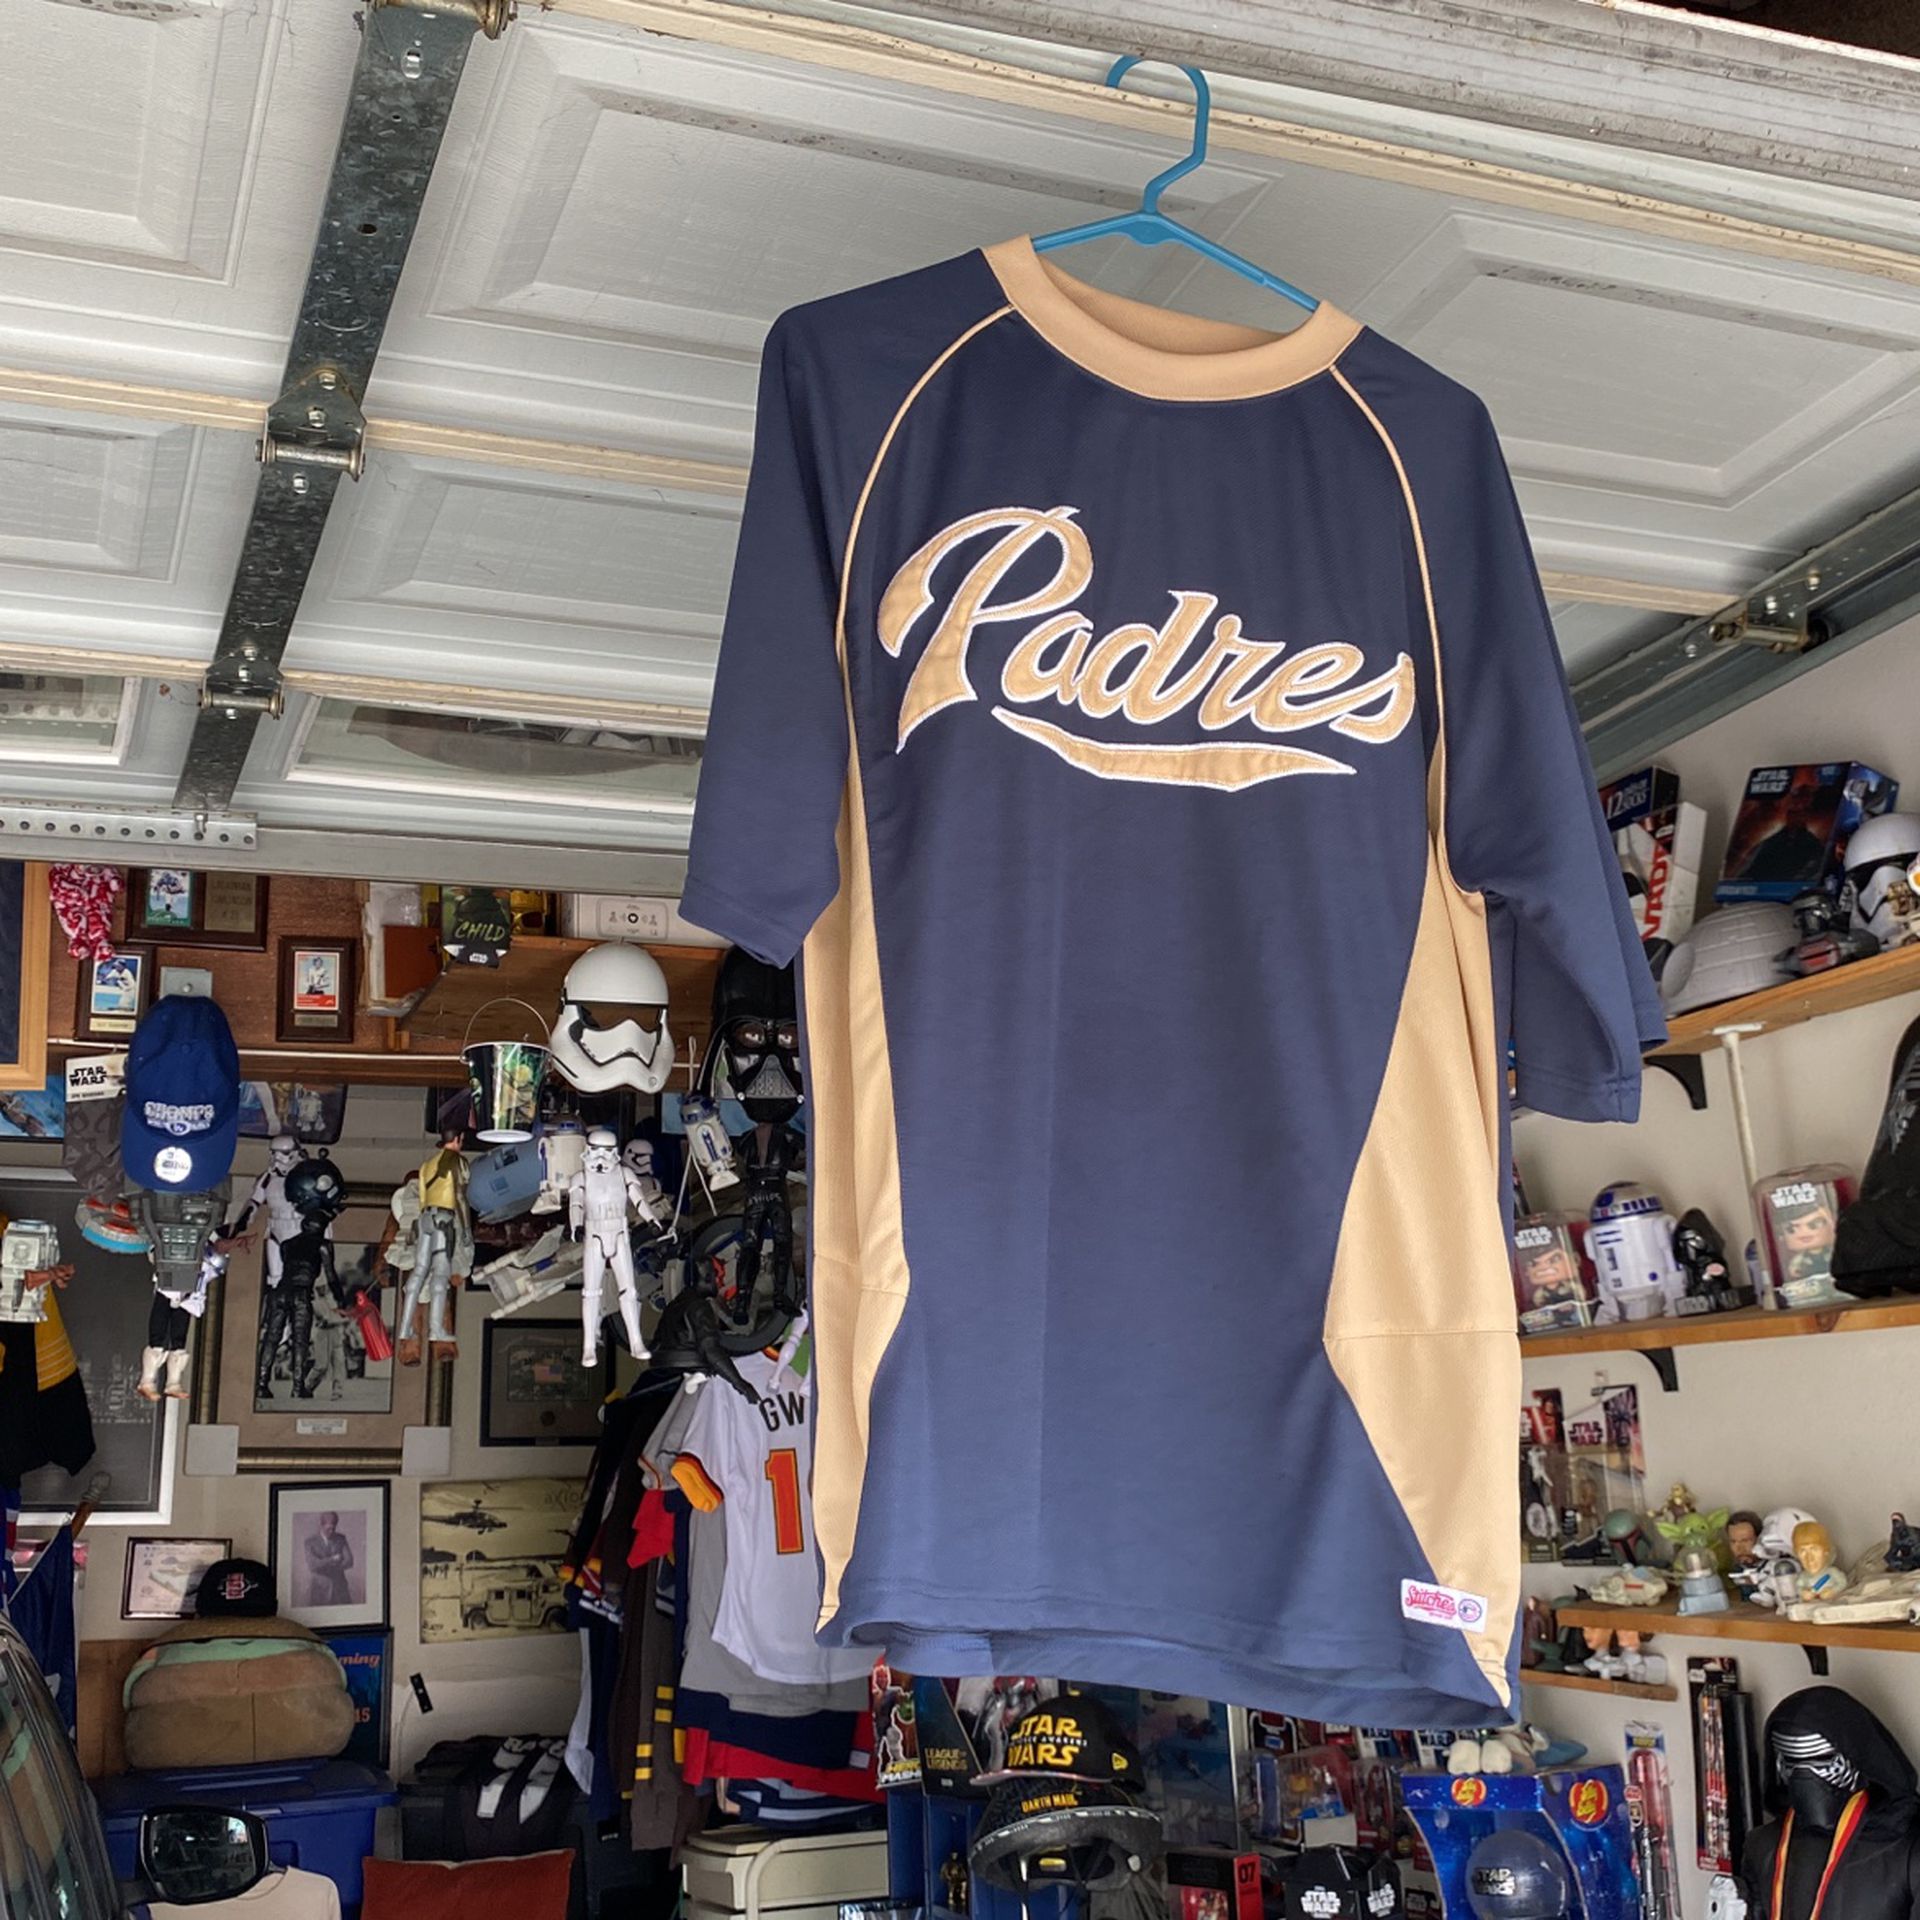 San Diego Padres Stitch Baseball Jersey -  Worldwide